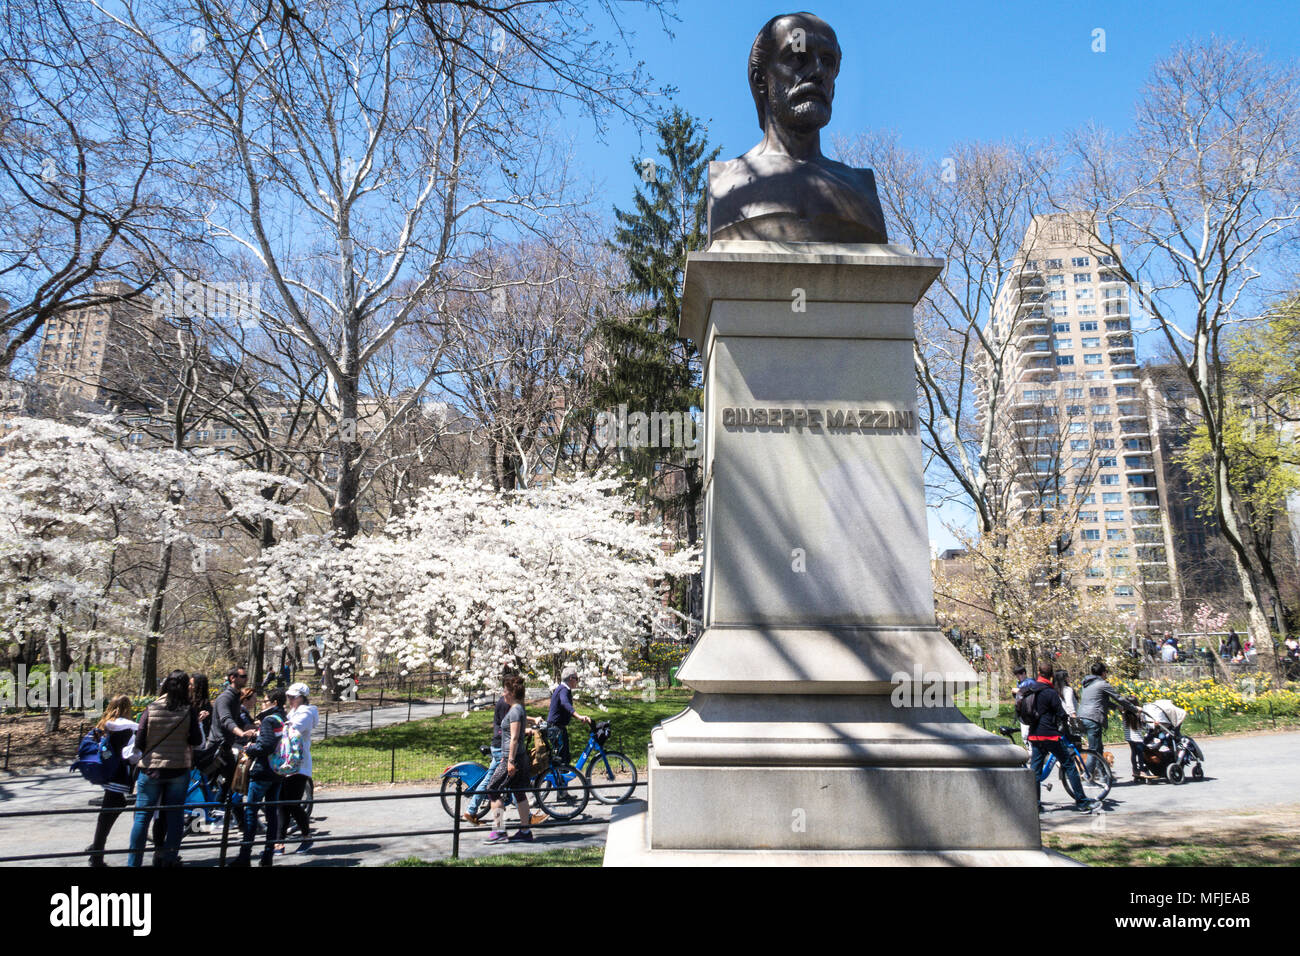 Giuseppe Mazzini, Italian Politician Activist, Statue in Central Park, NYC, USA Stock Photo